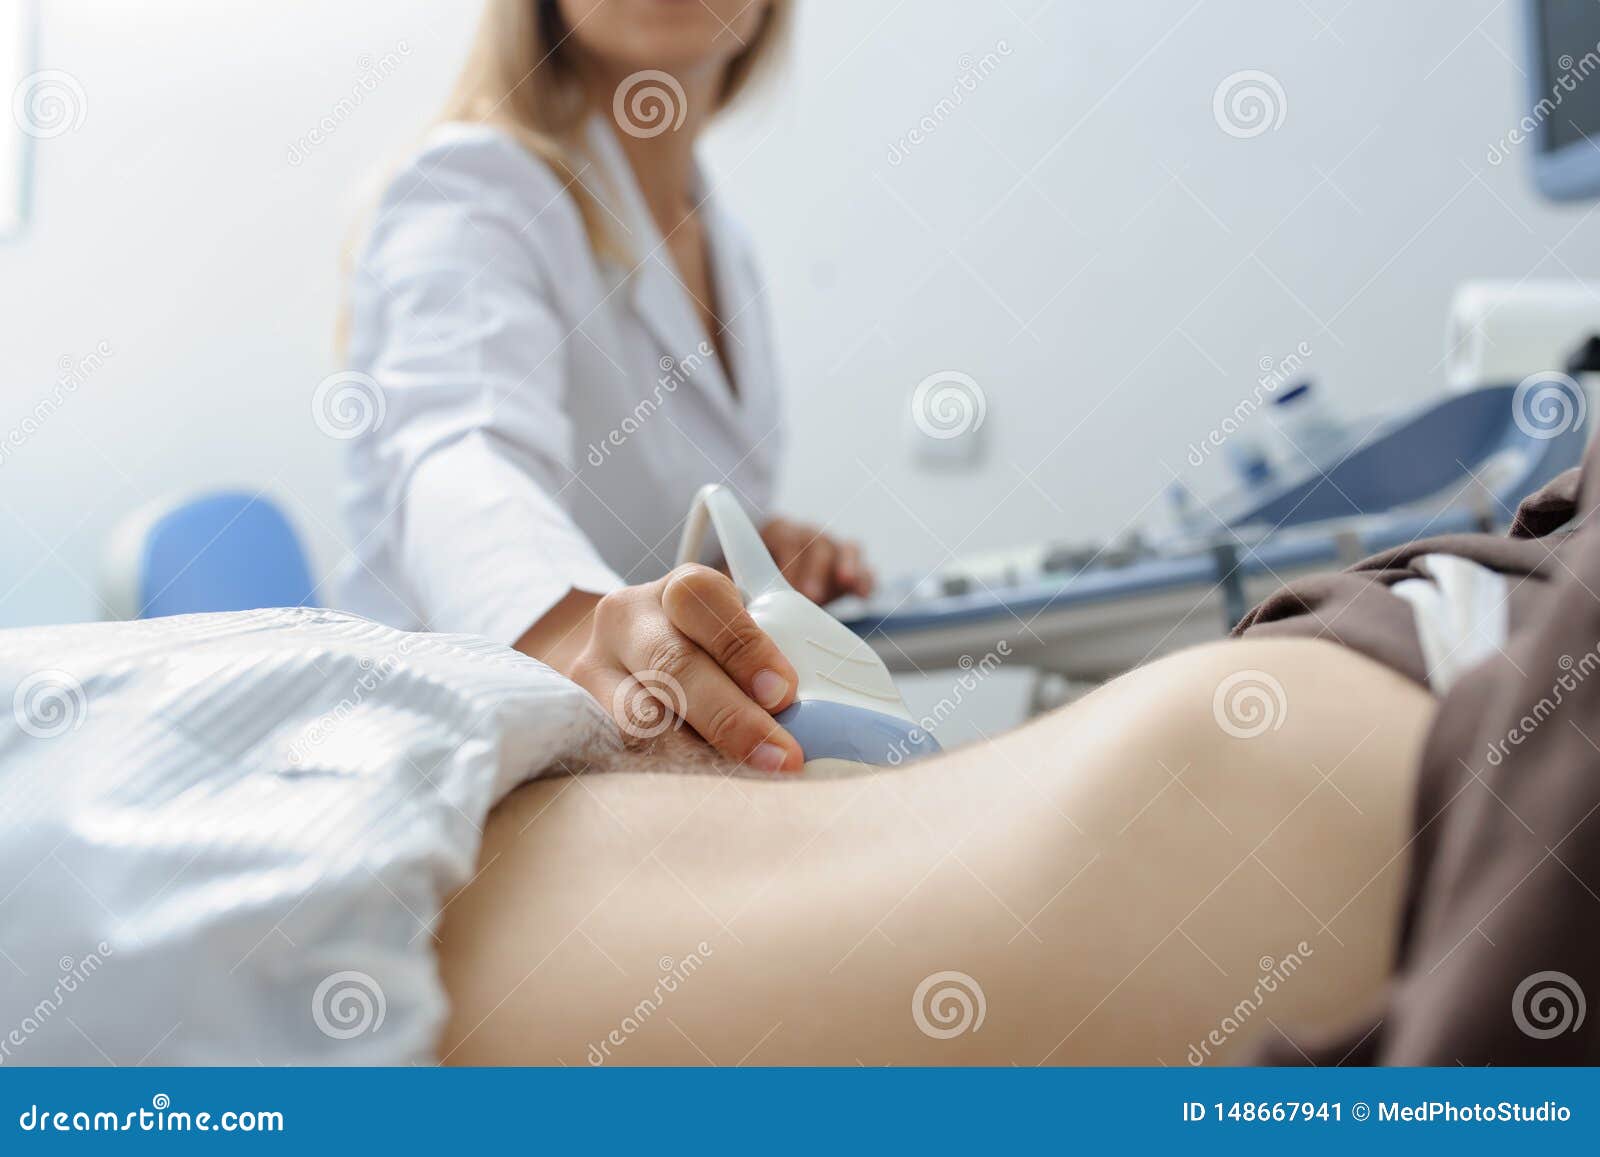 doctor  examination a man at abdomen  usg